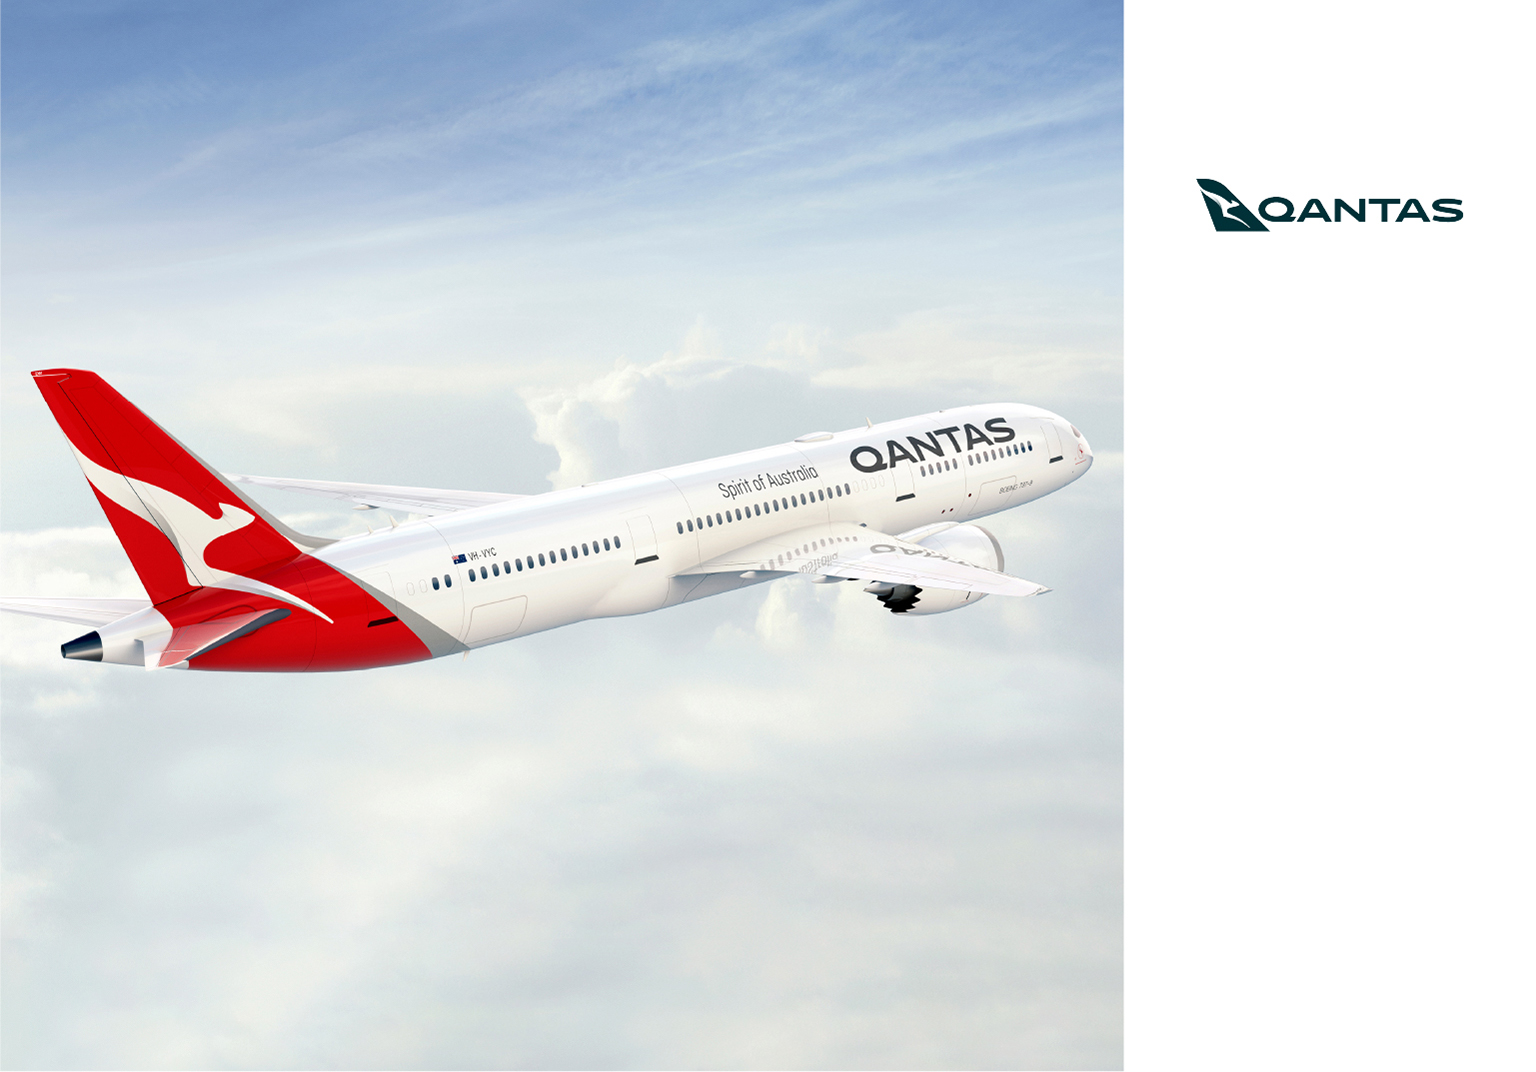 Qantas customer story